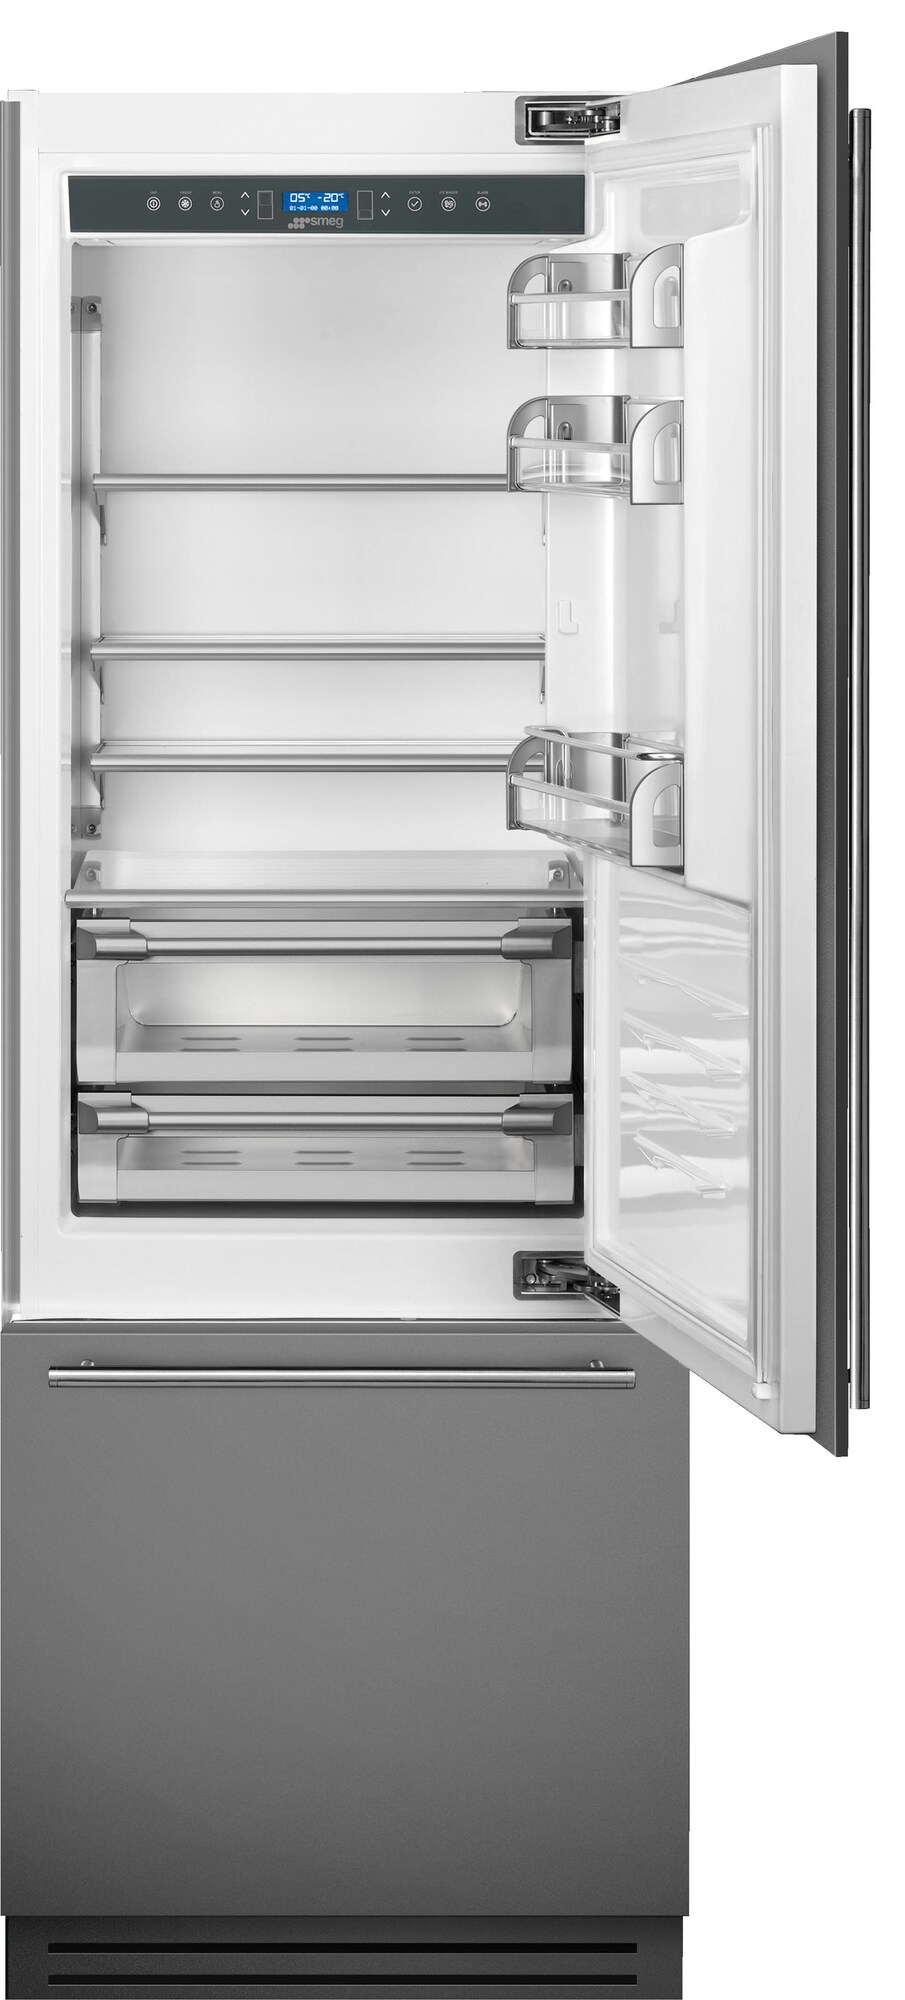 Smeg køleskab/fryser RI76RSI indbygget